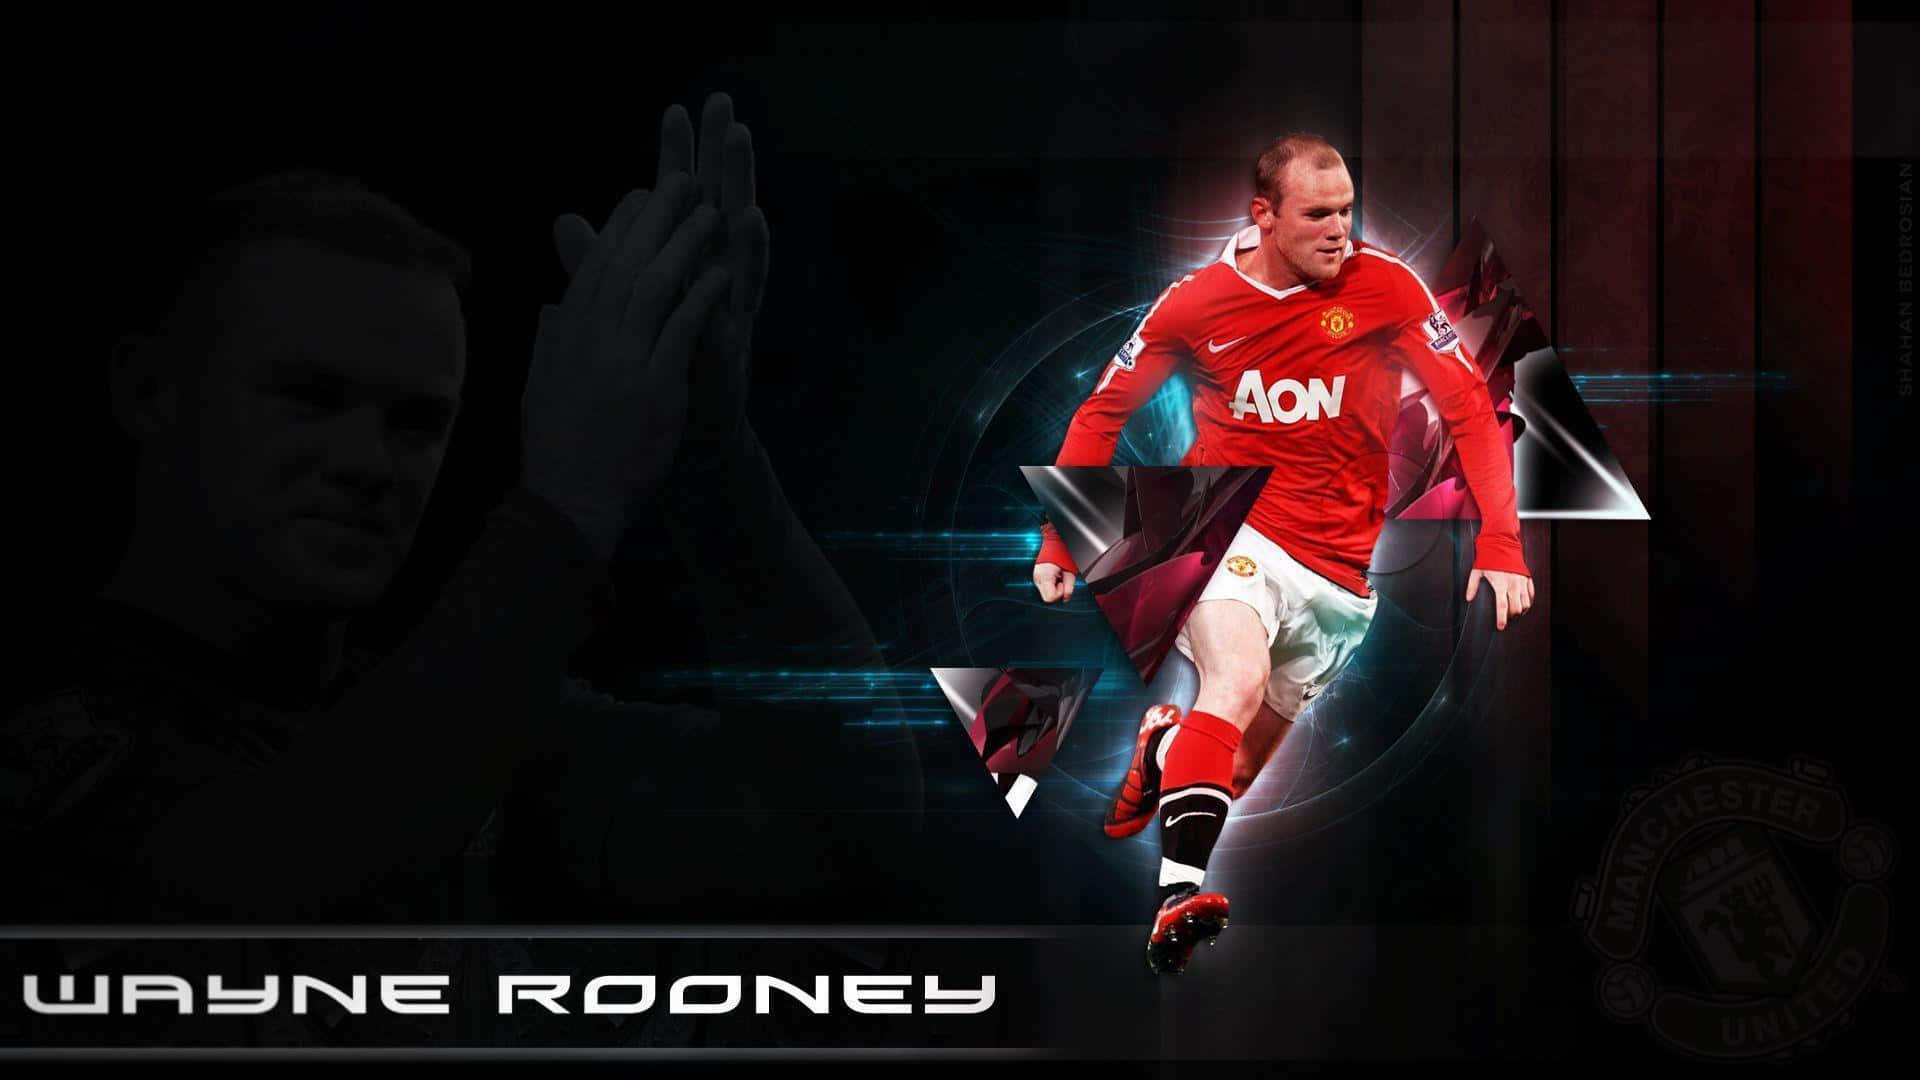 Wayne Rooney, England's record goal scorer